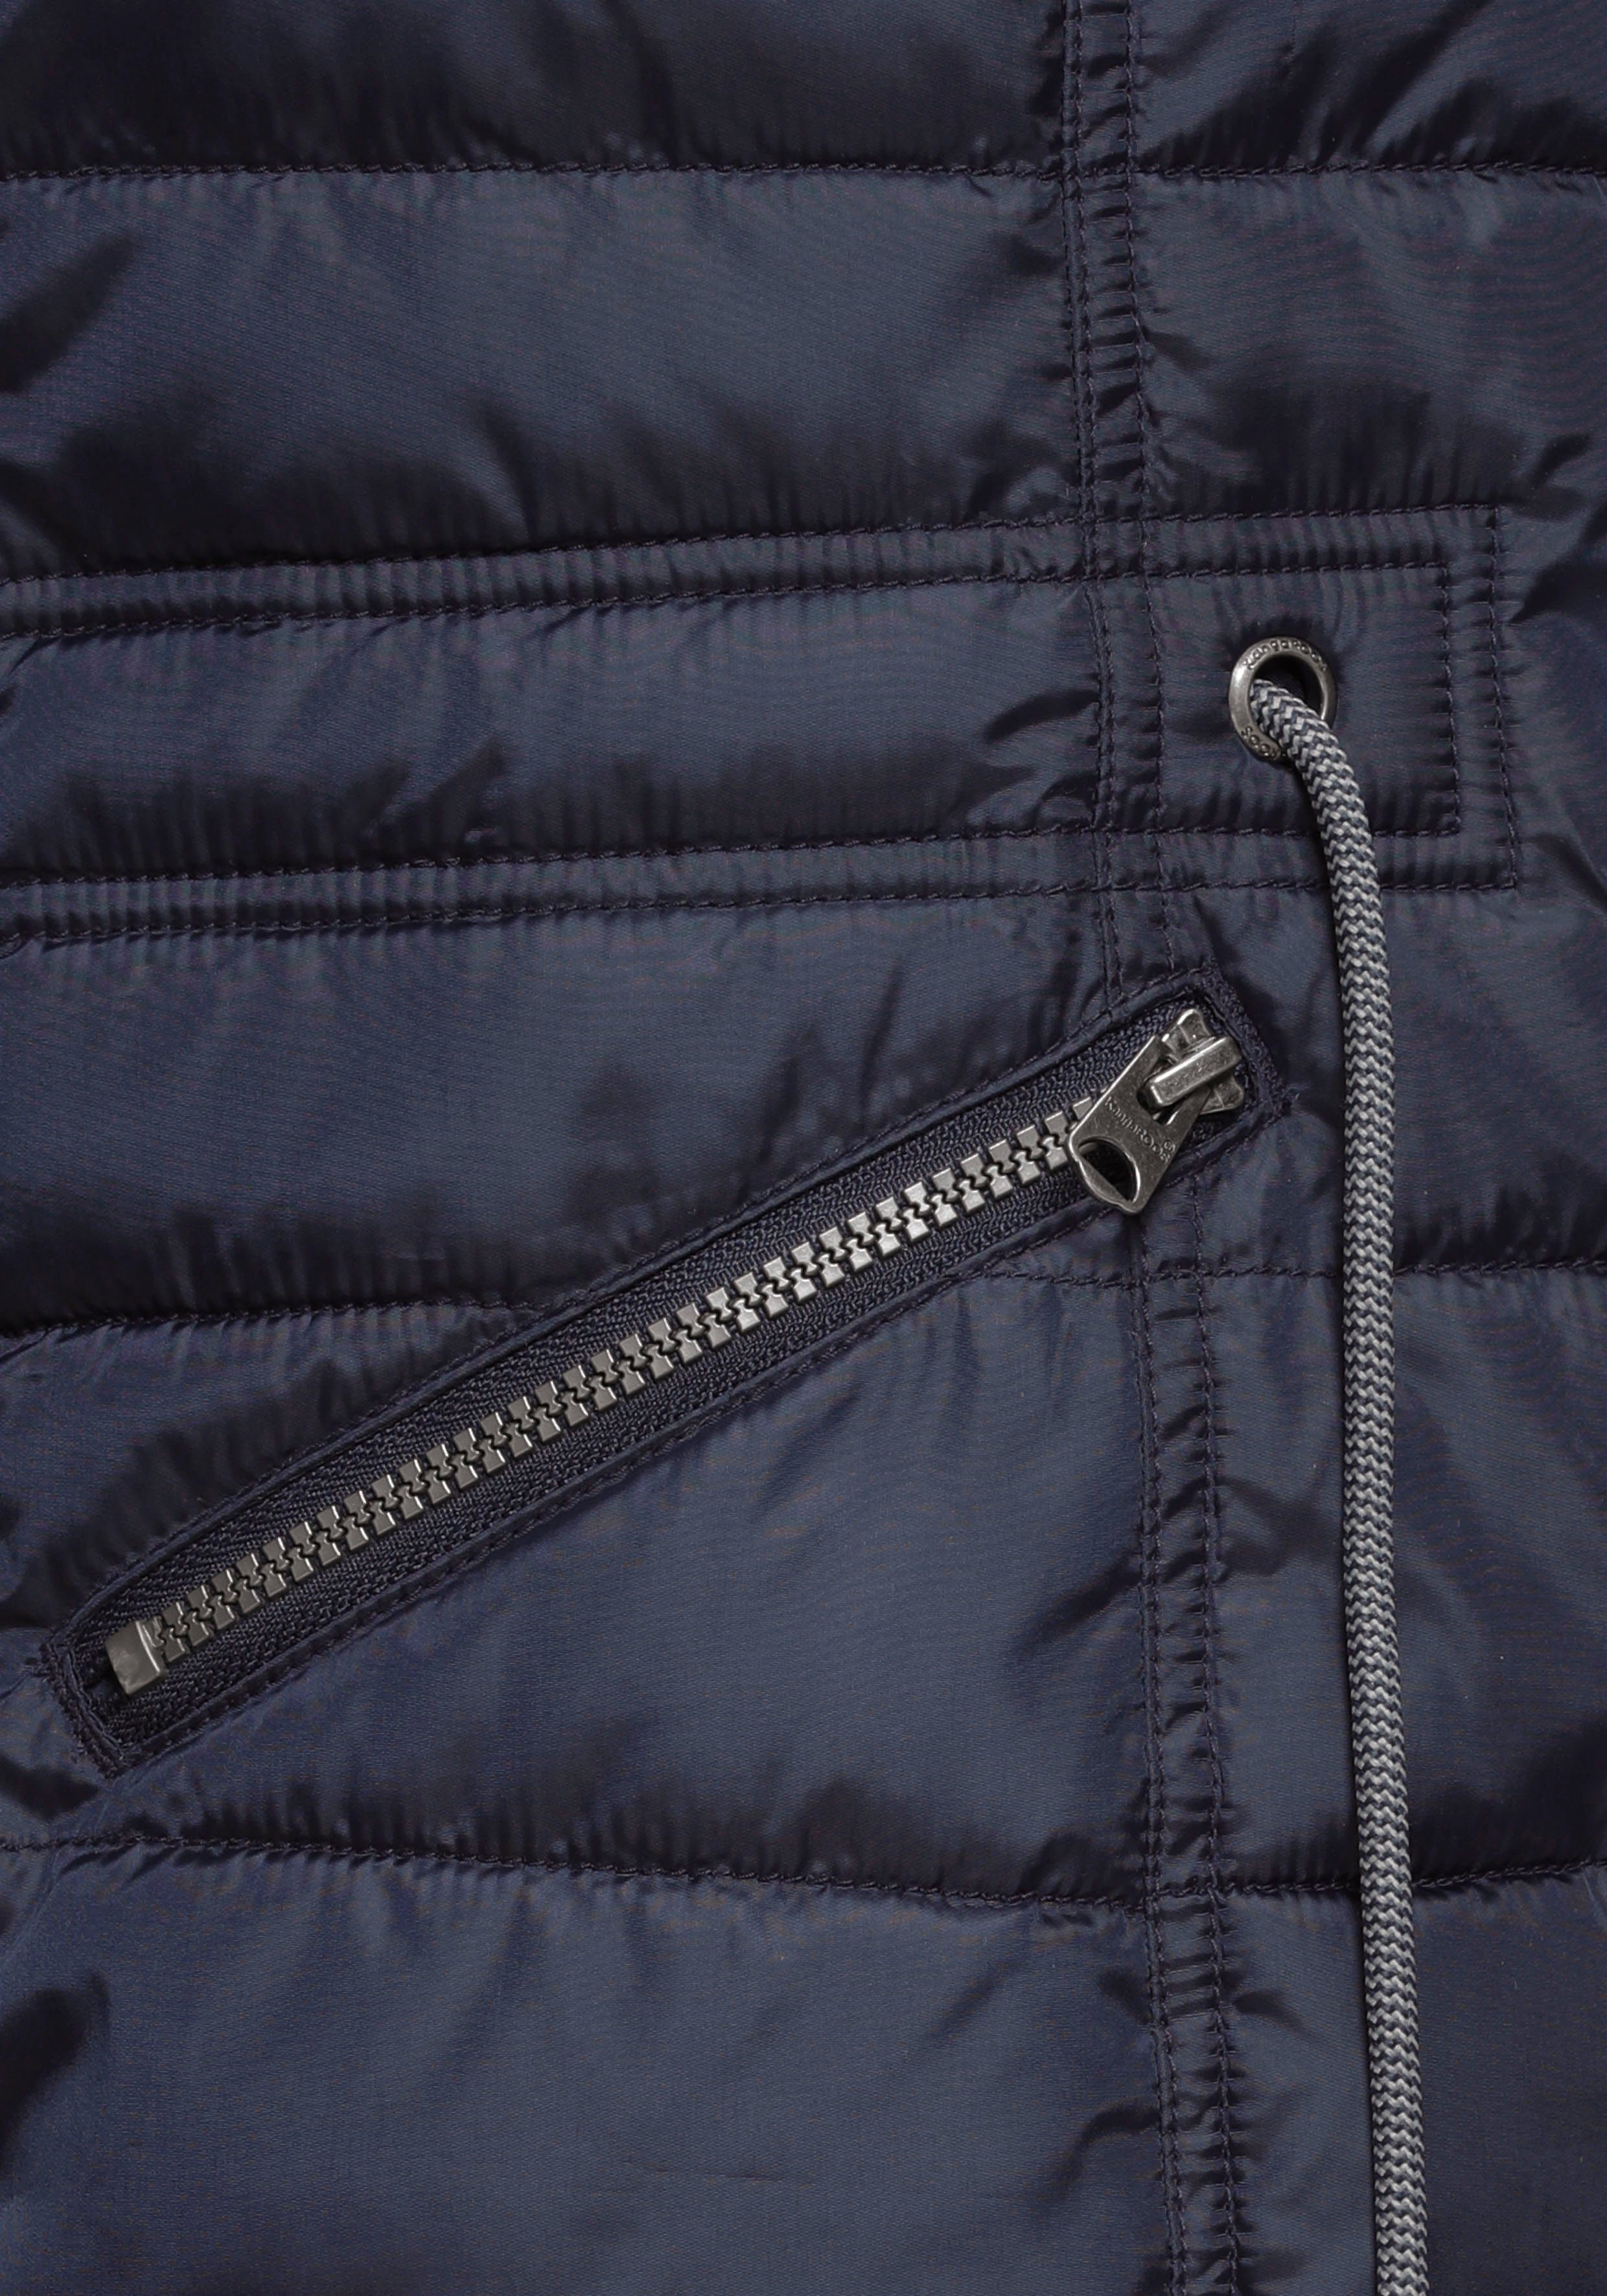 KangaROOS Steppjacke mit kuscheligem, Material) aus abnehmbarem blau (Jacke nachhaltigem der Kapuze Fellimitat-Kragen an